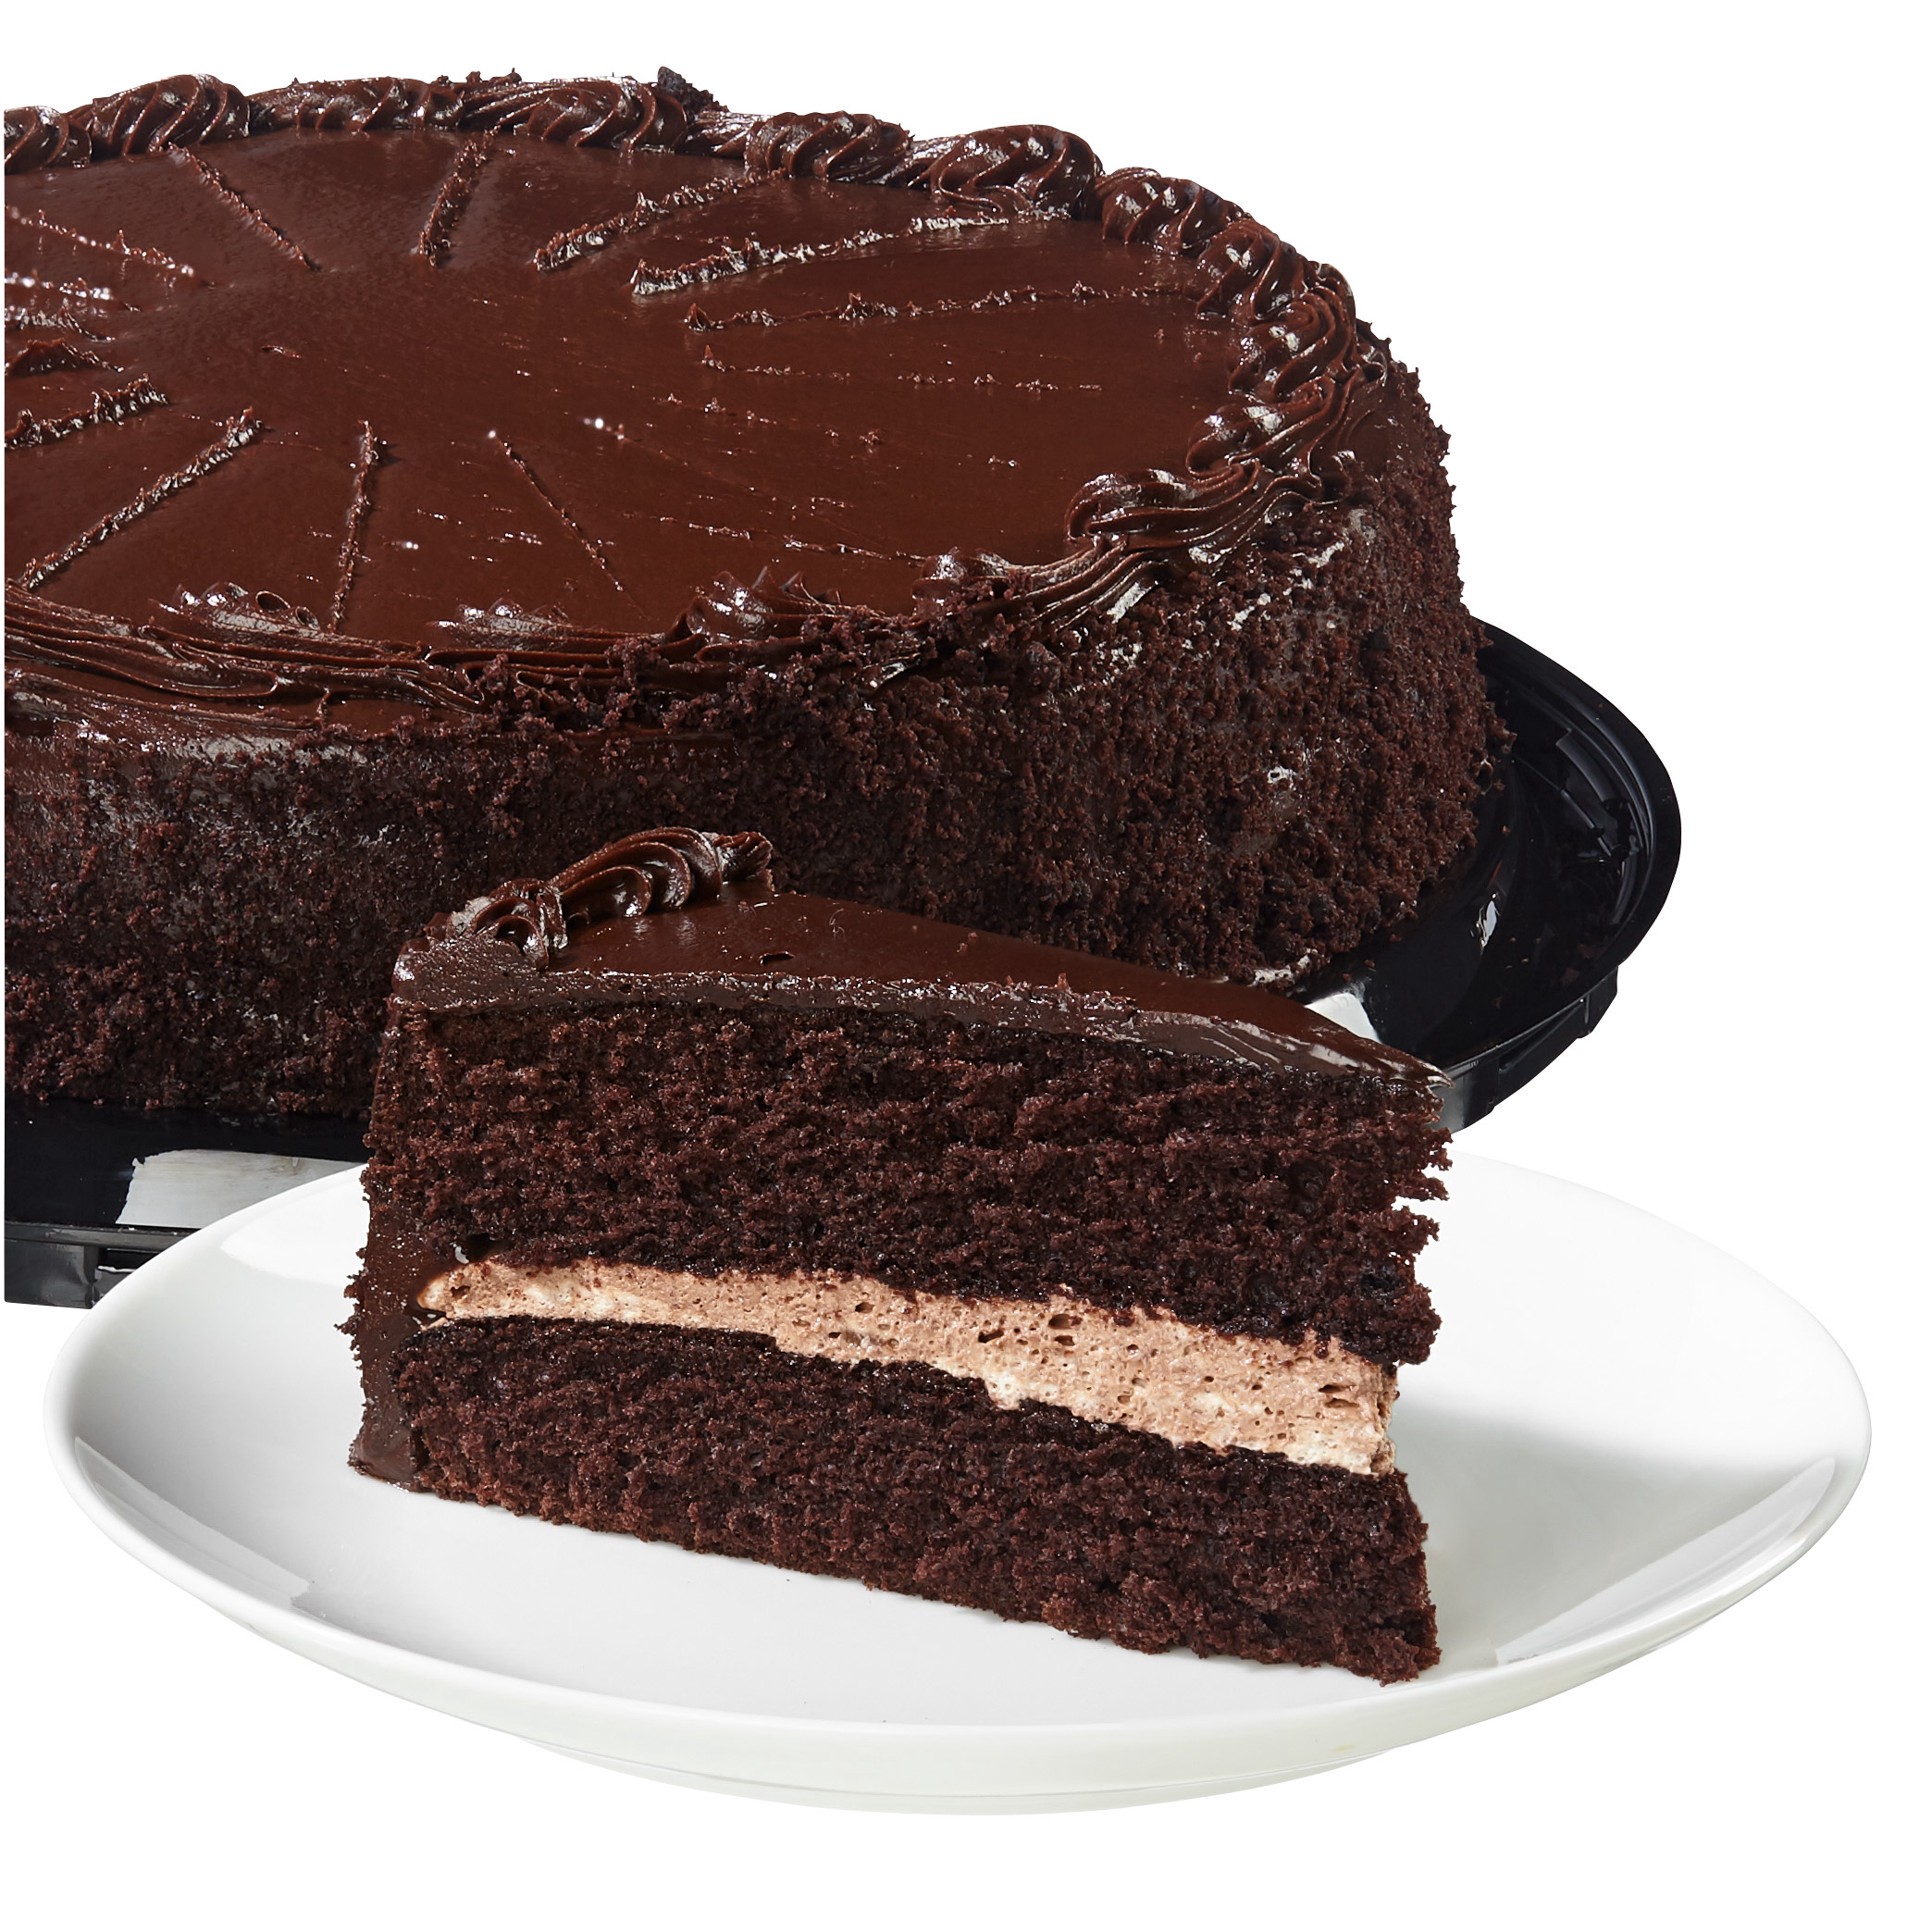 Costco type chocolate cake